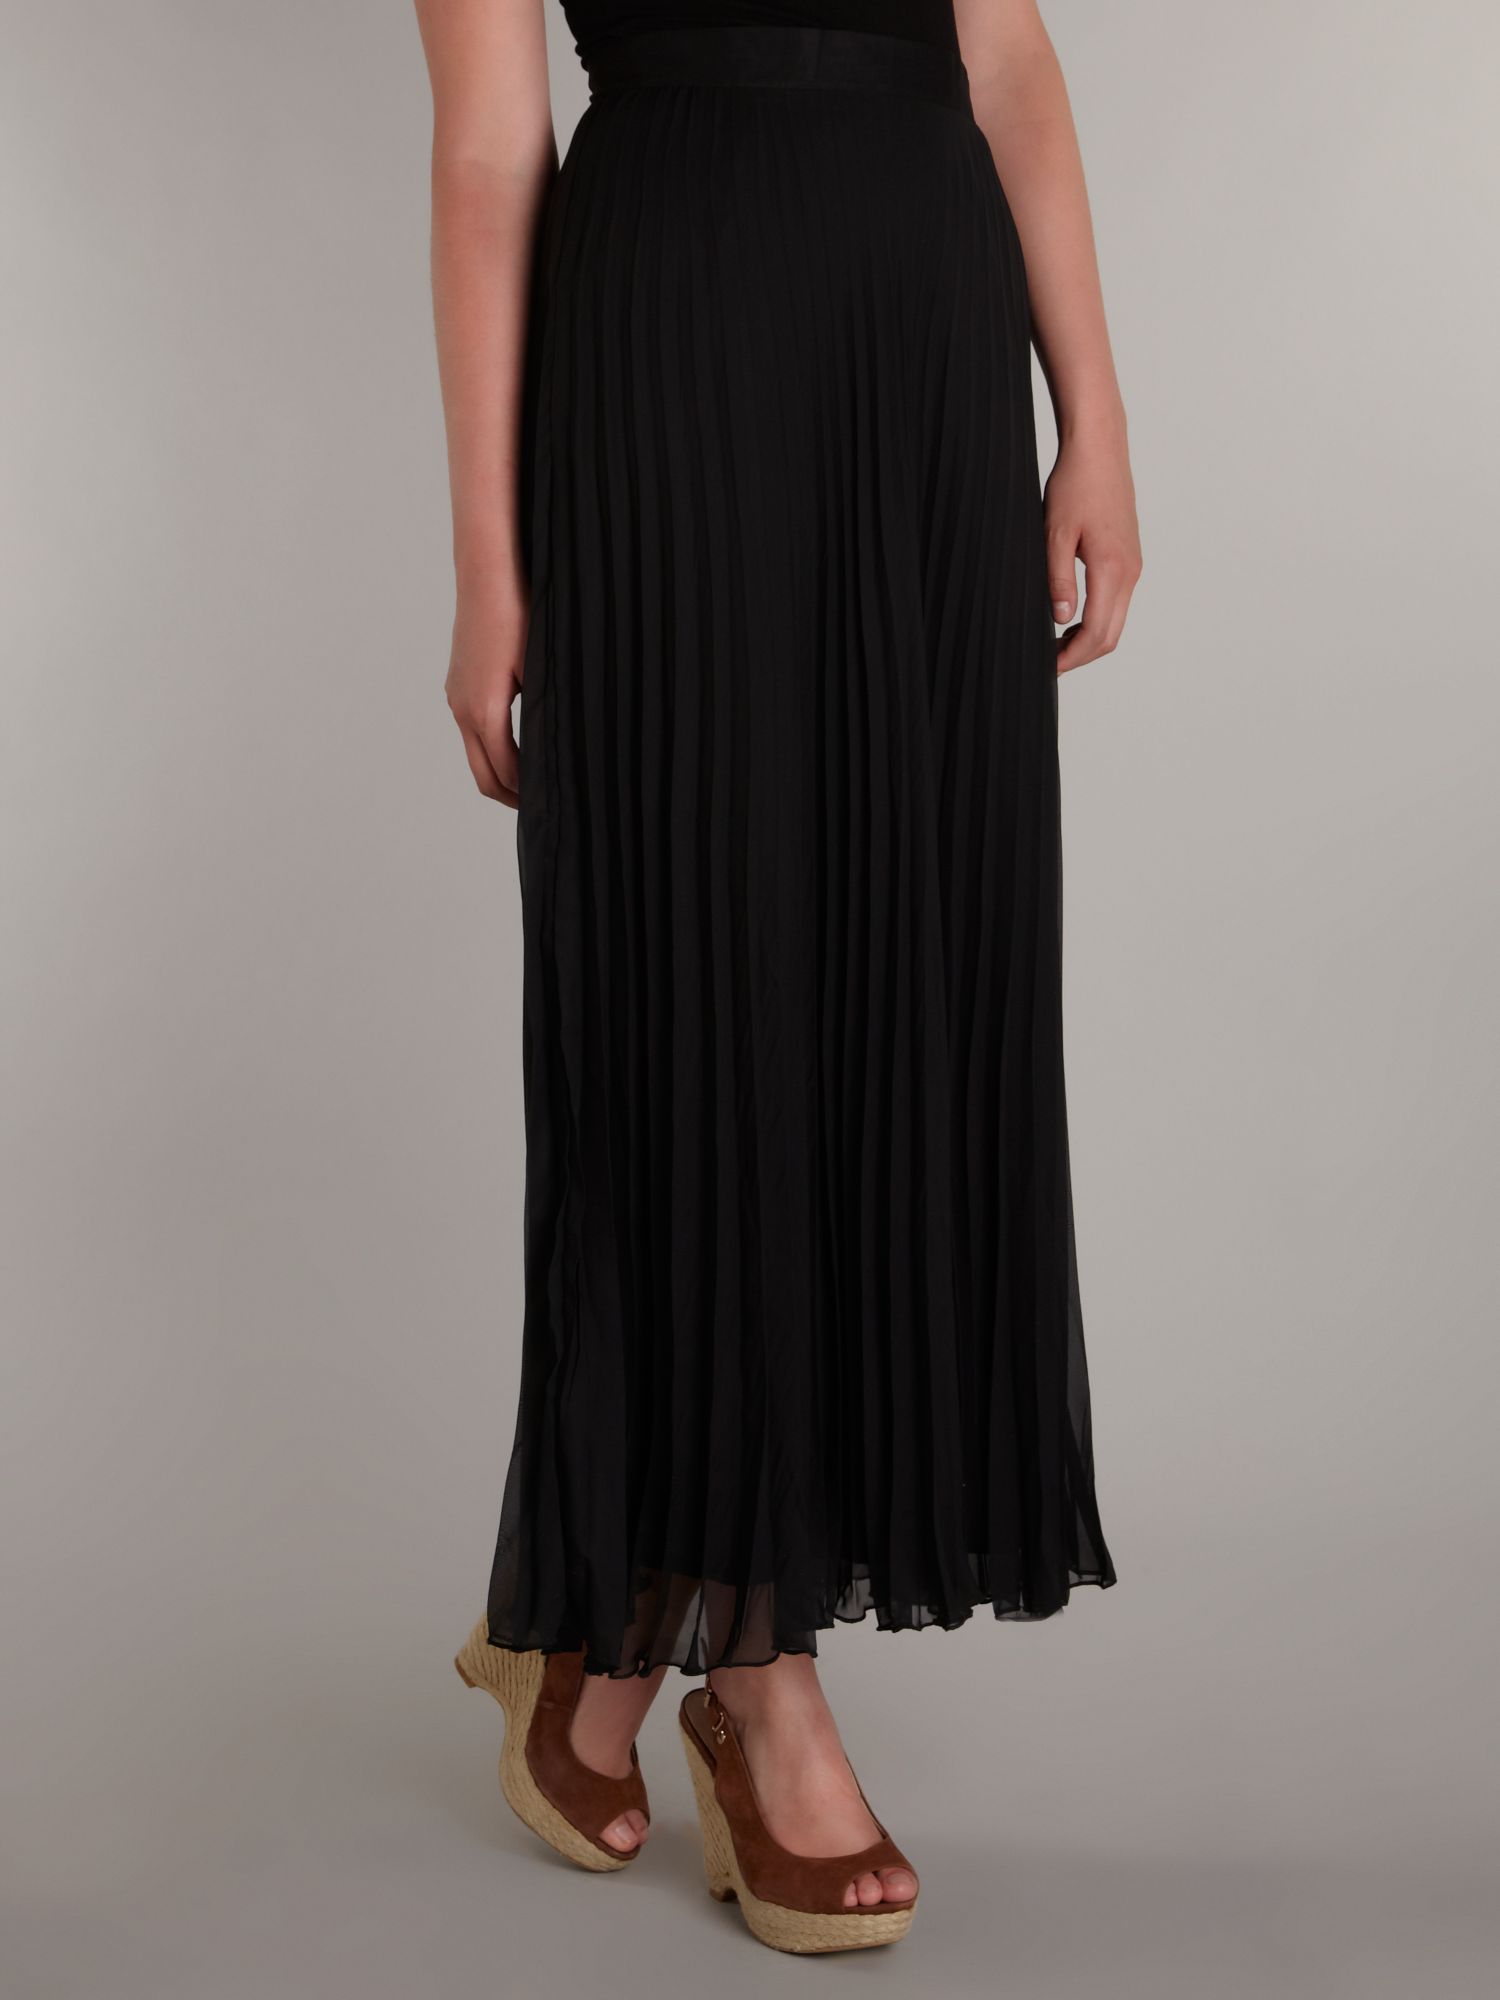 Sodamix Long Ruffle Maxi Skirt in Black | Lyst